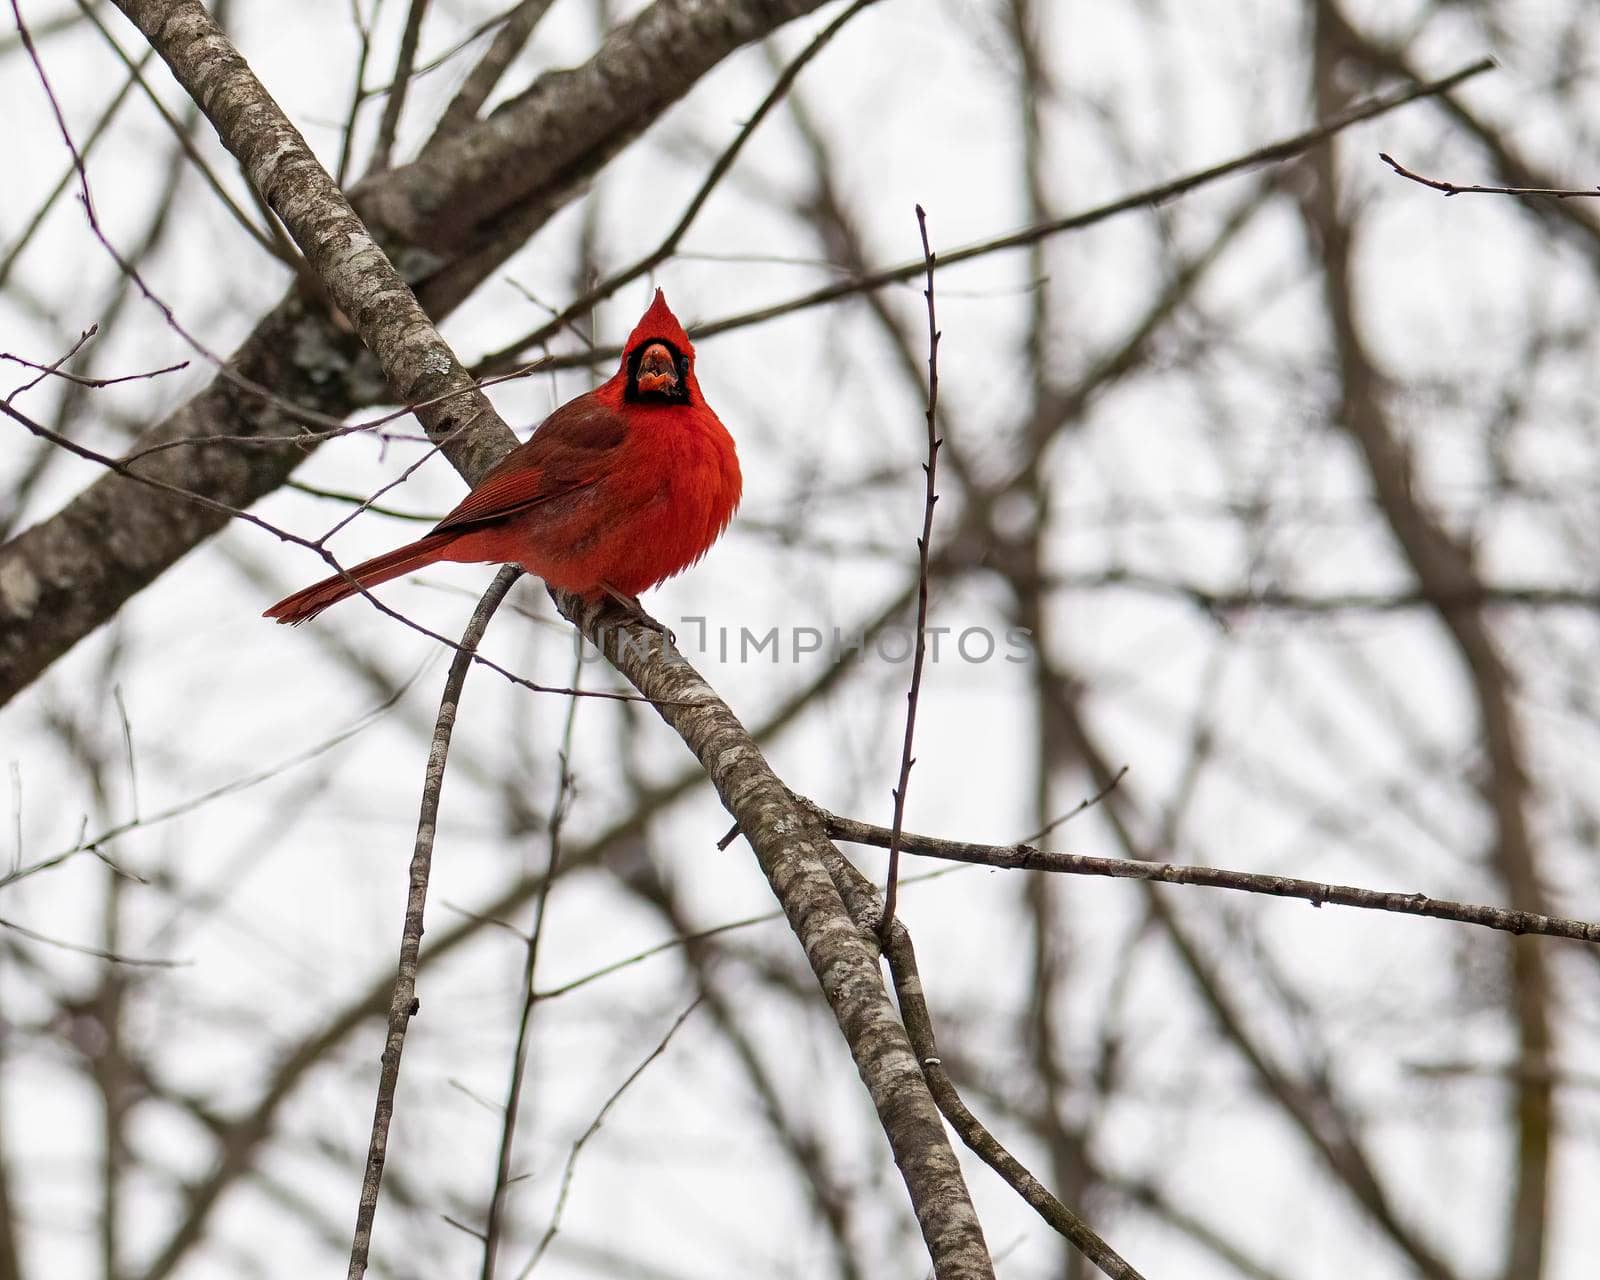 Male Cardinal Singing on Tree Limb by CharlieFloyd